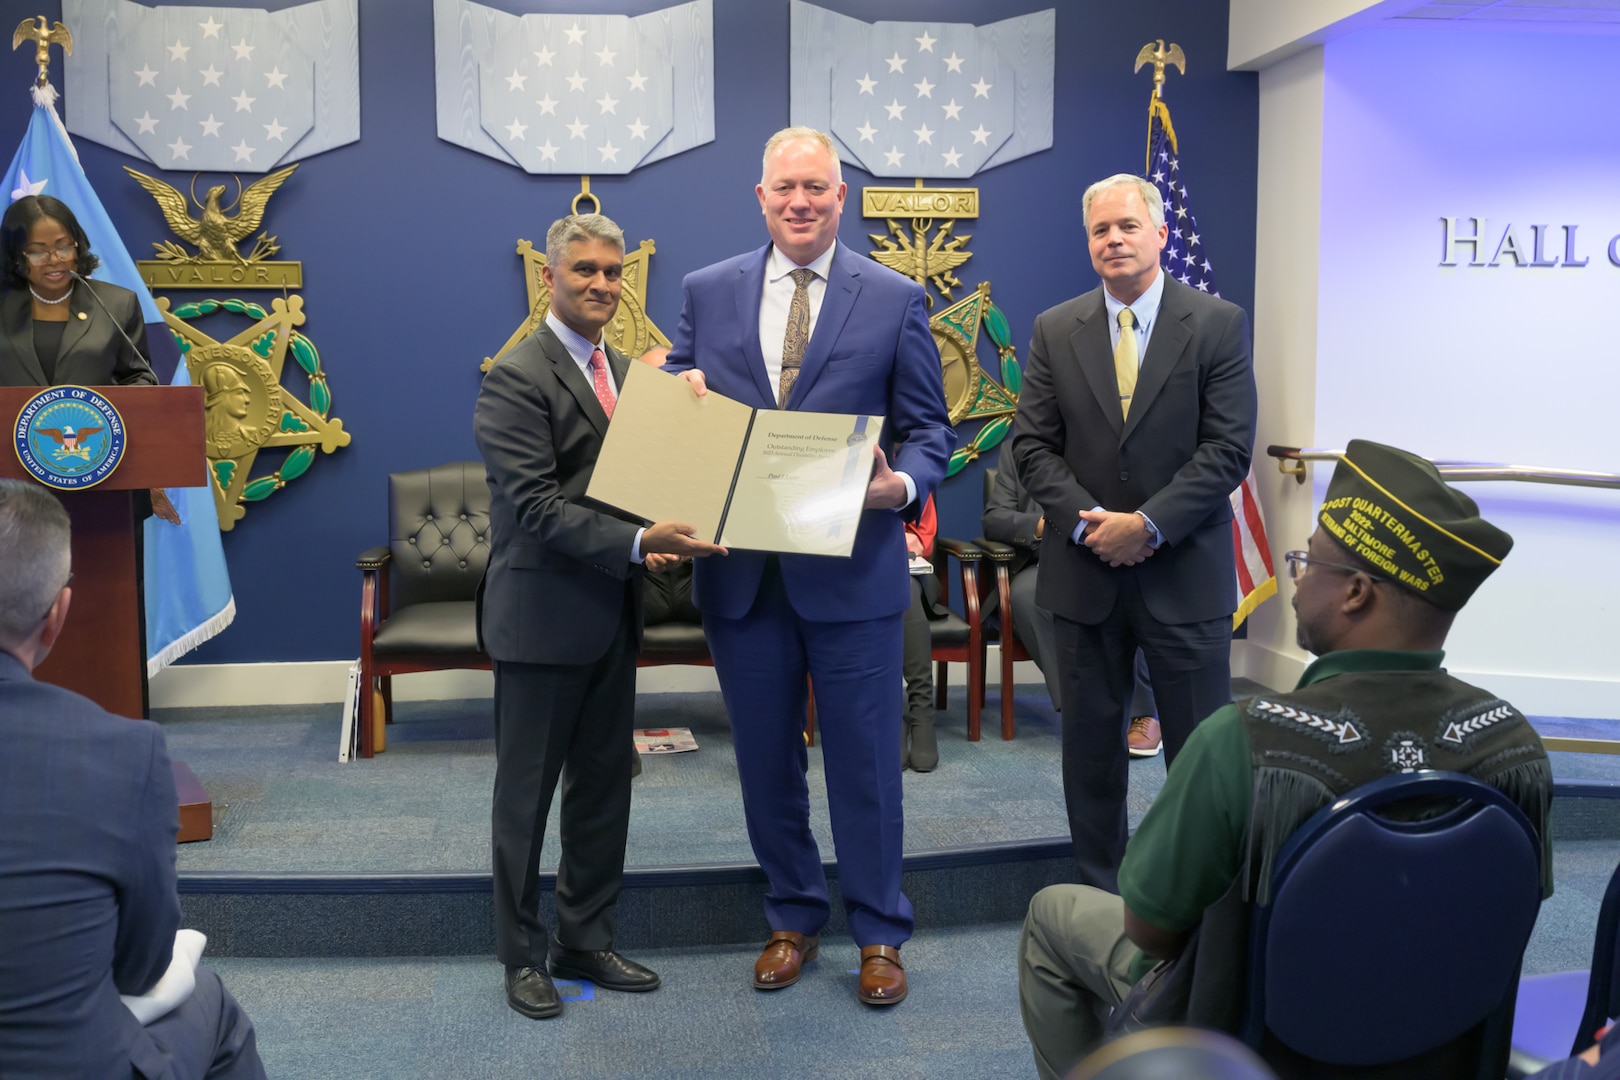 Paul Luehr receives the Secretary of Defense Disability Award